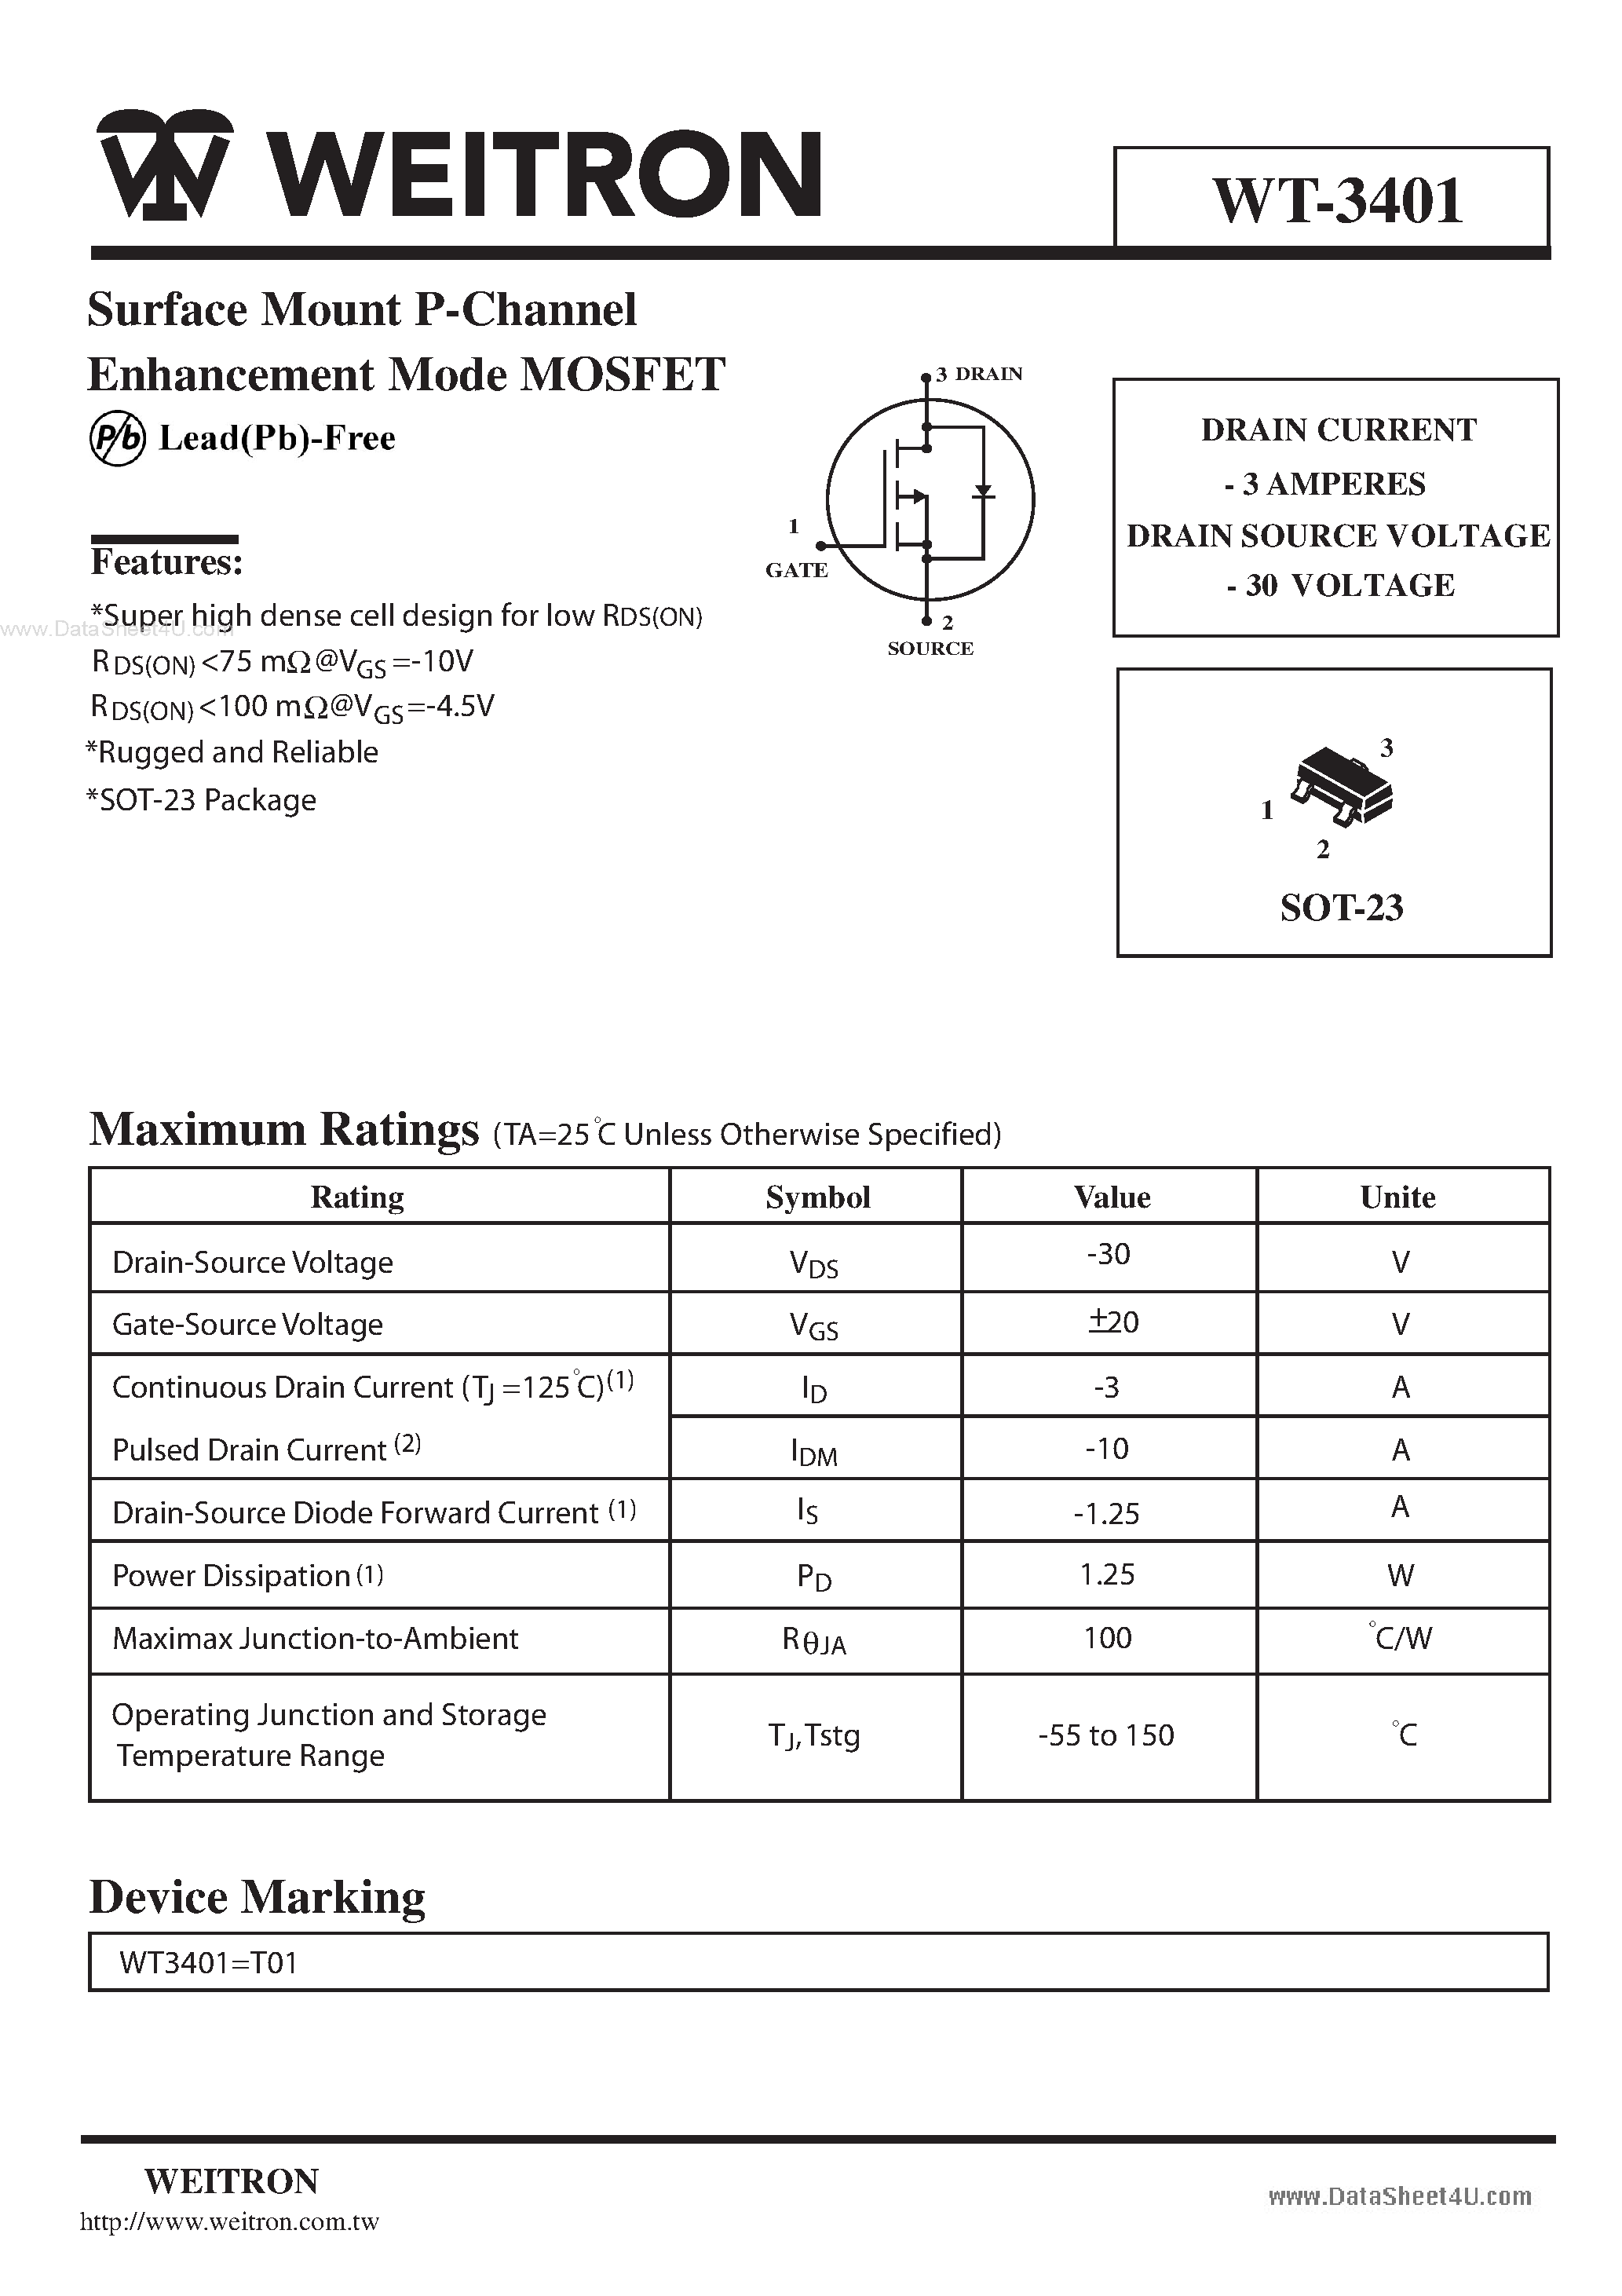 Datasheet WT-3401 - Surface Mount P-Channel Enhancement Mode MOSFET page 1